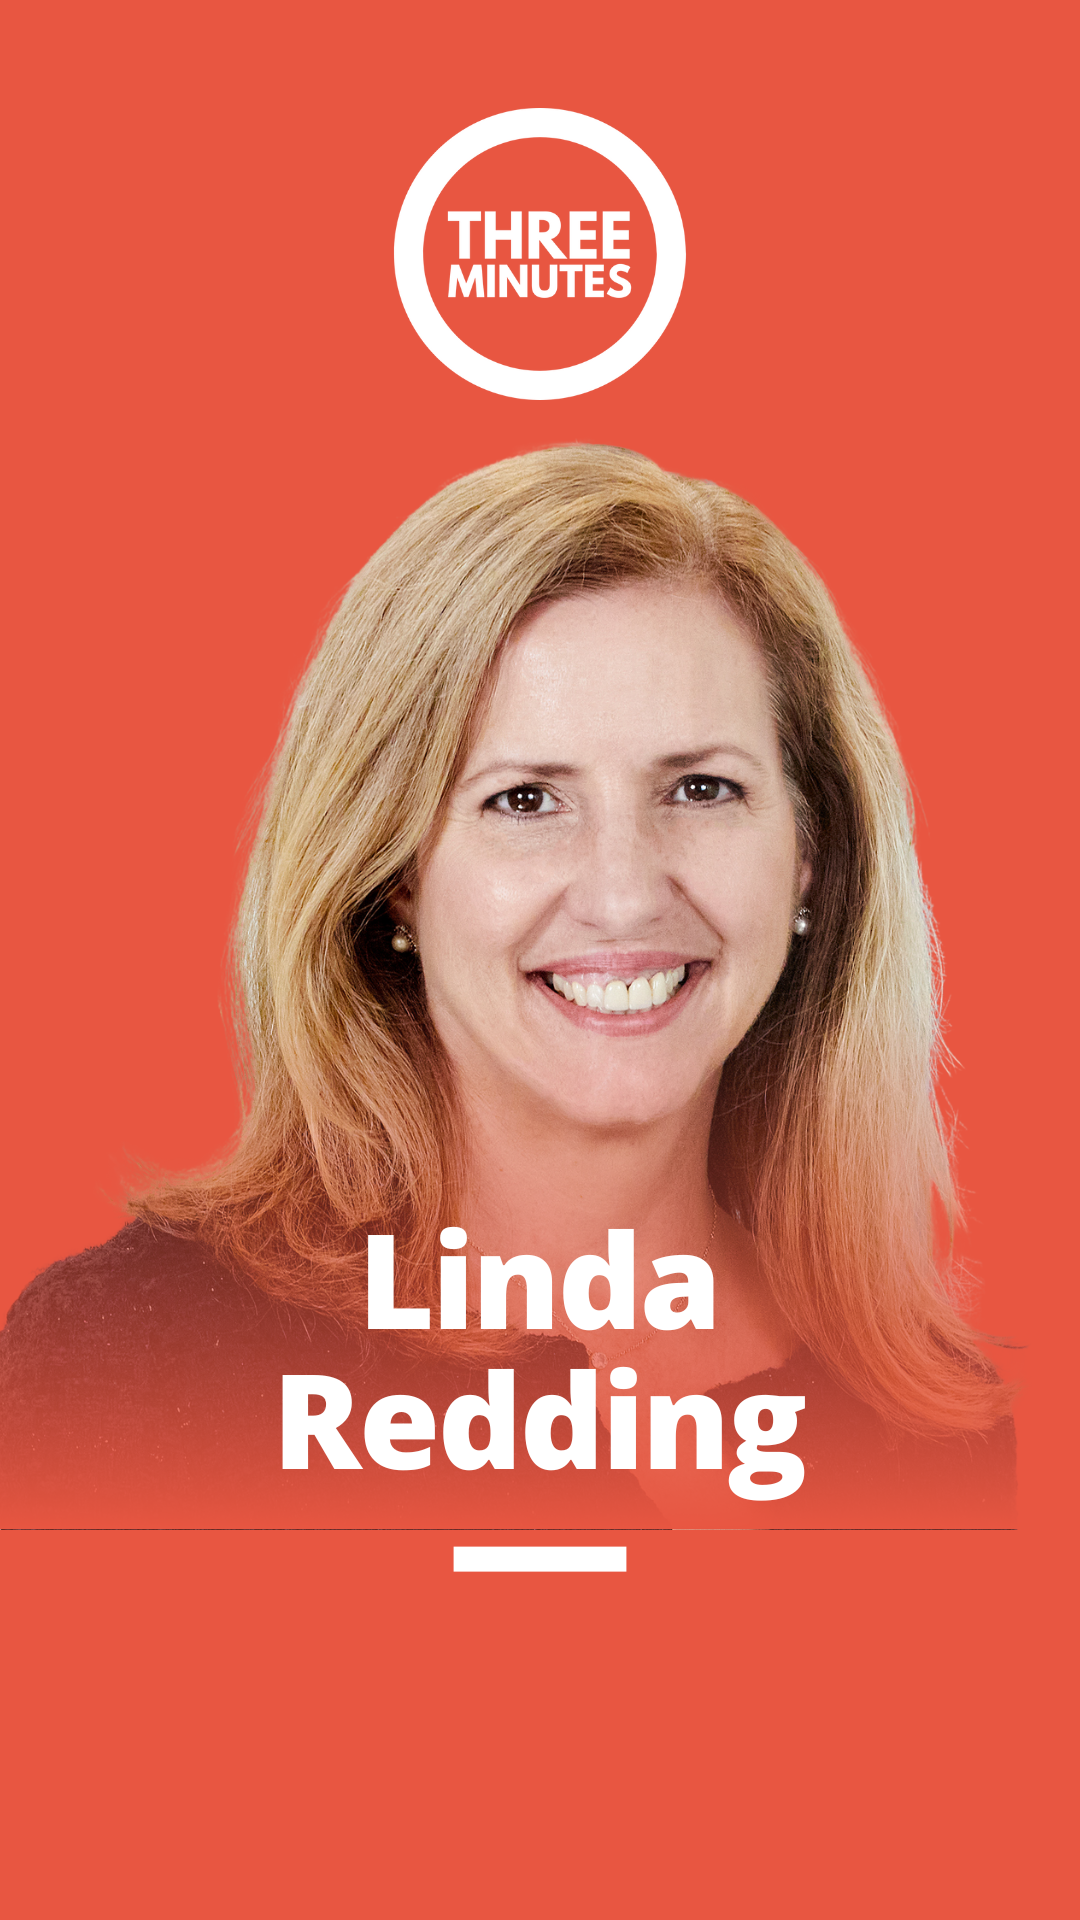 Linda Redding